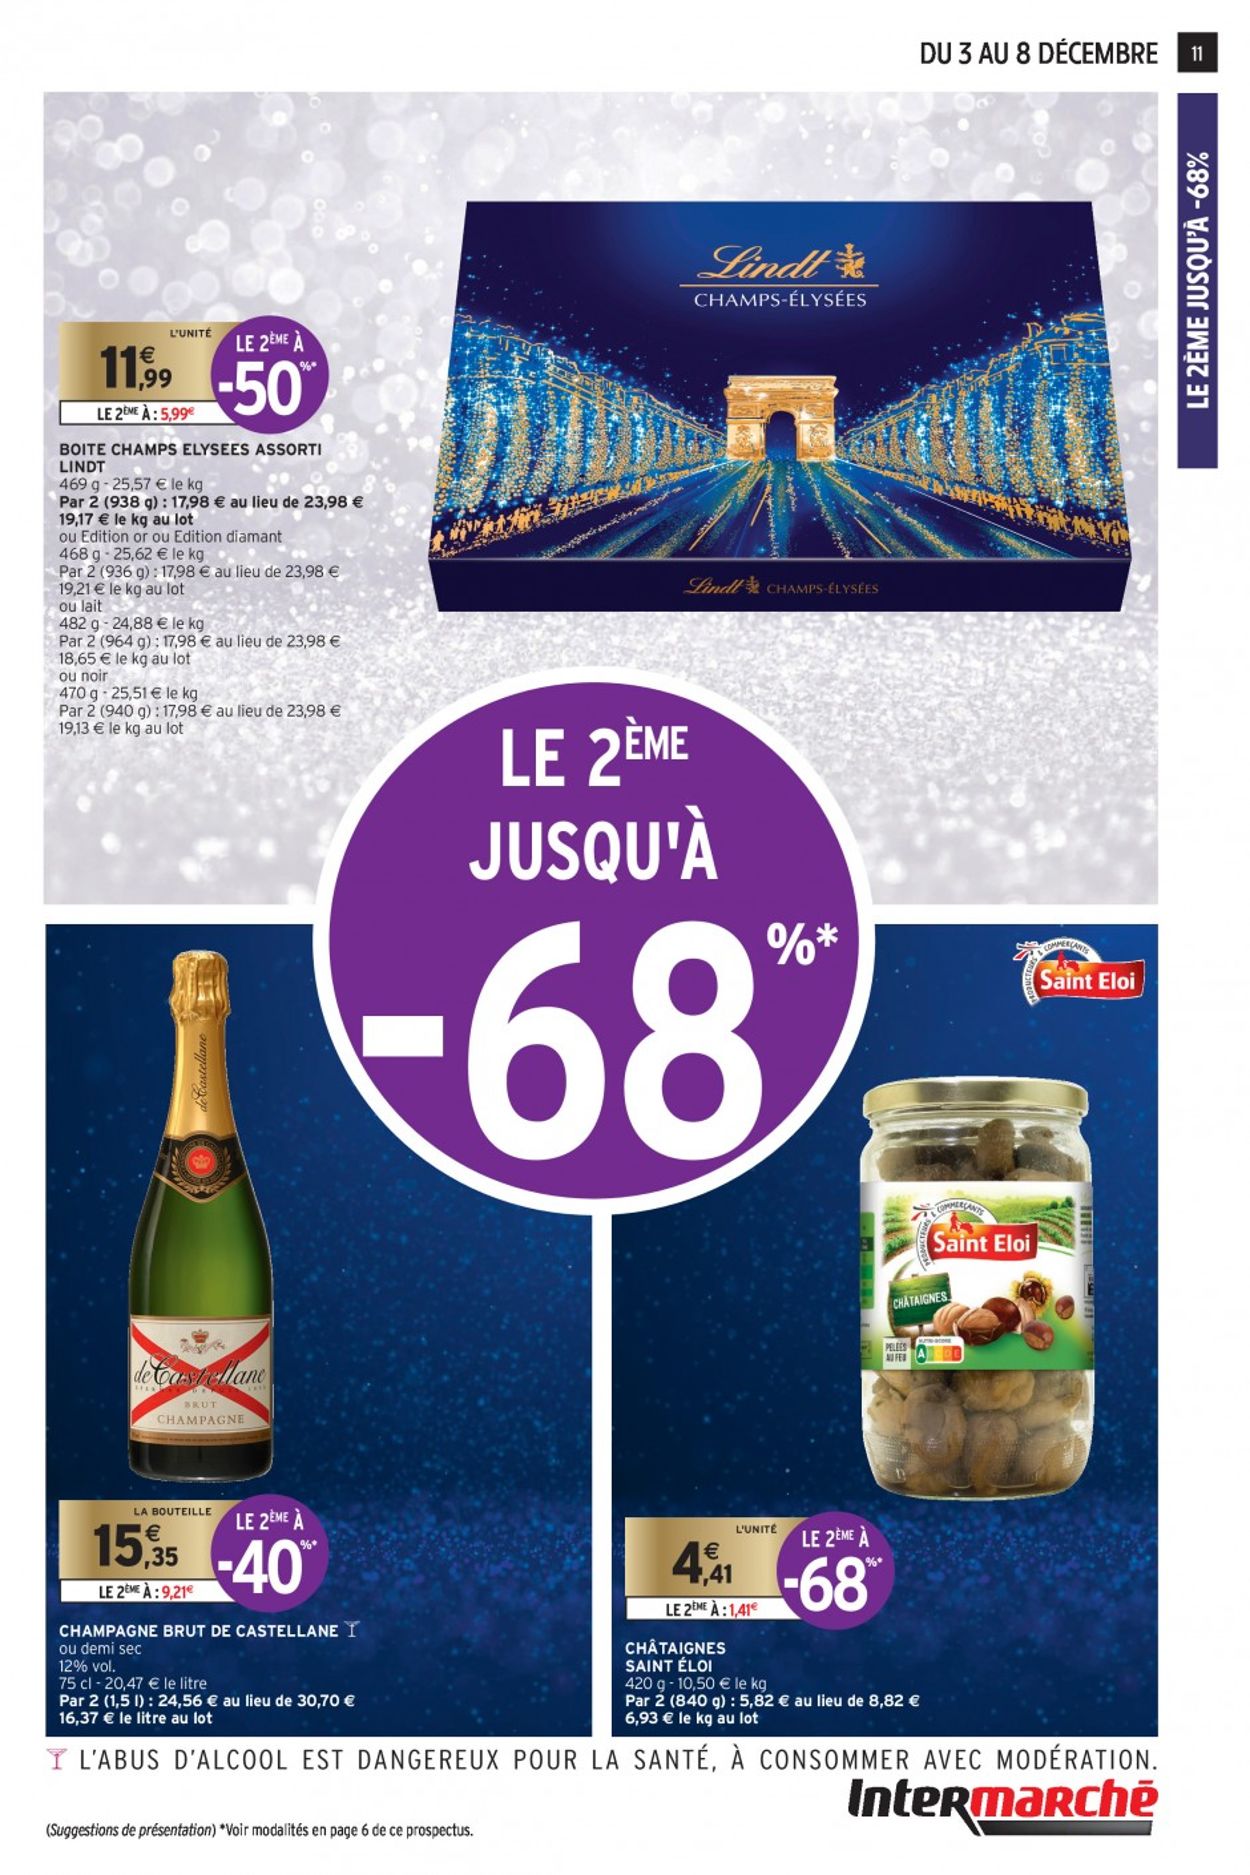 Intermarché Catalogue - 03.12-08.12.2019 (Page 11)